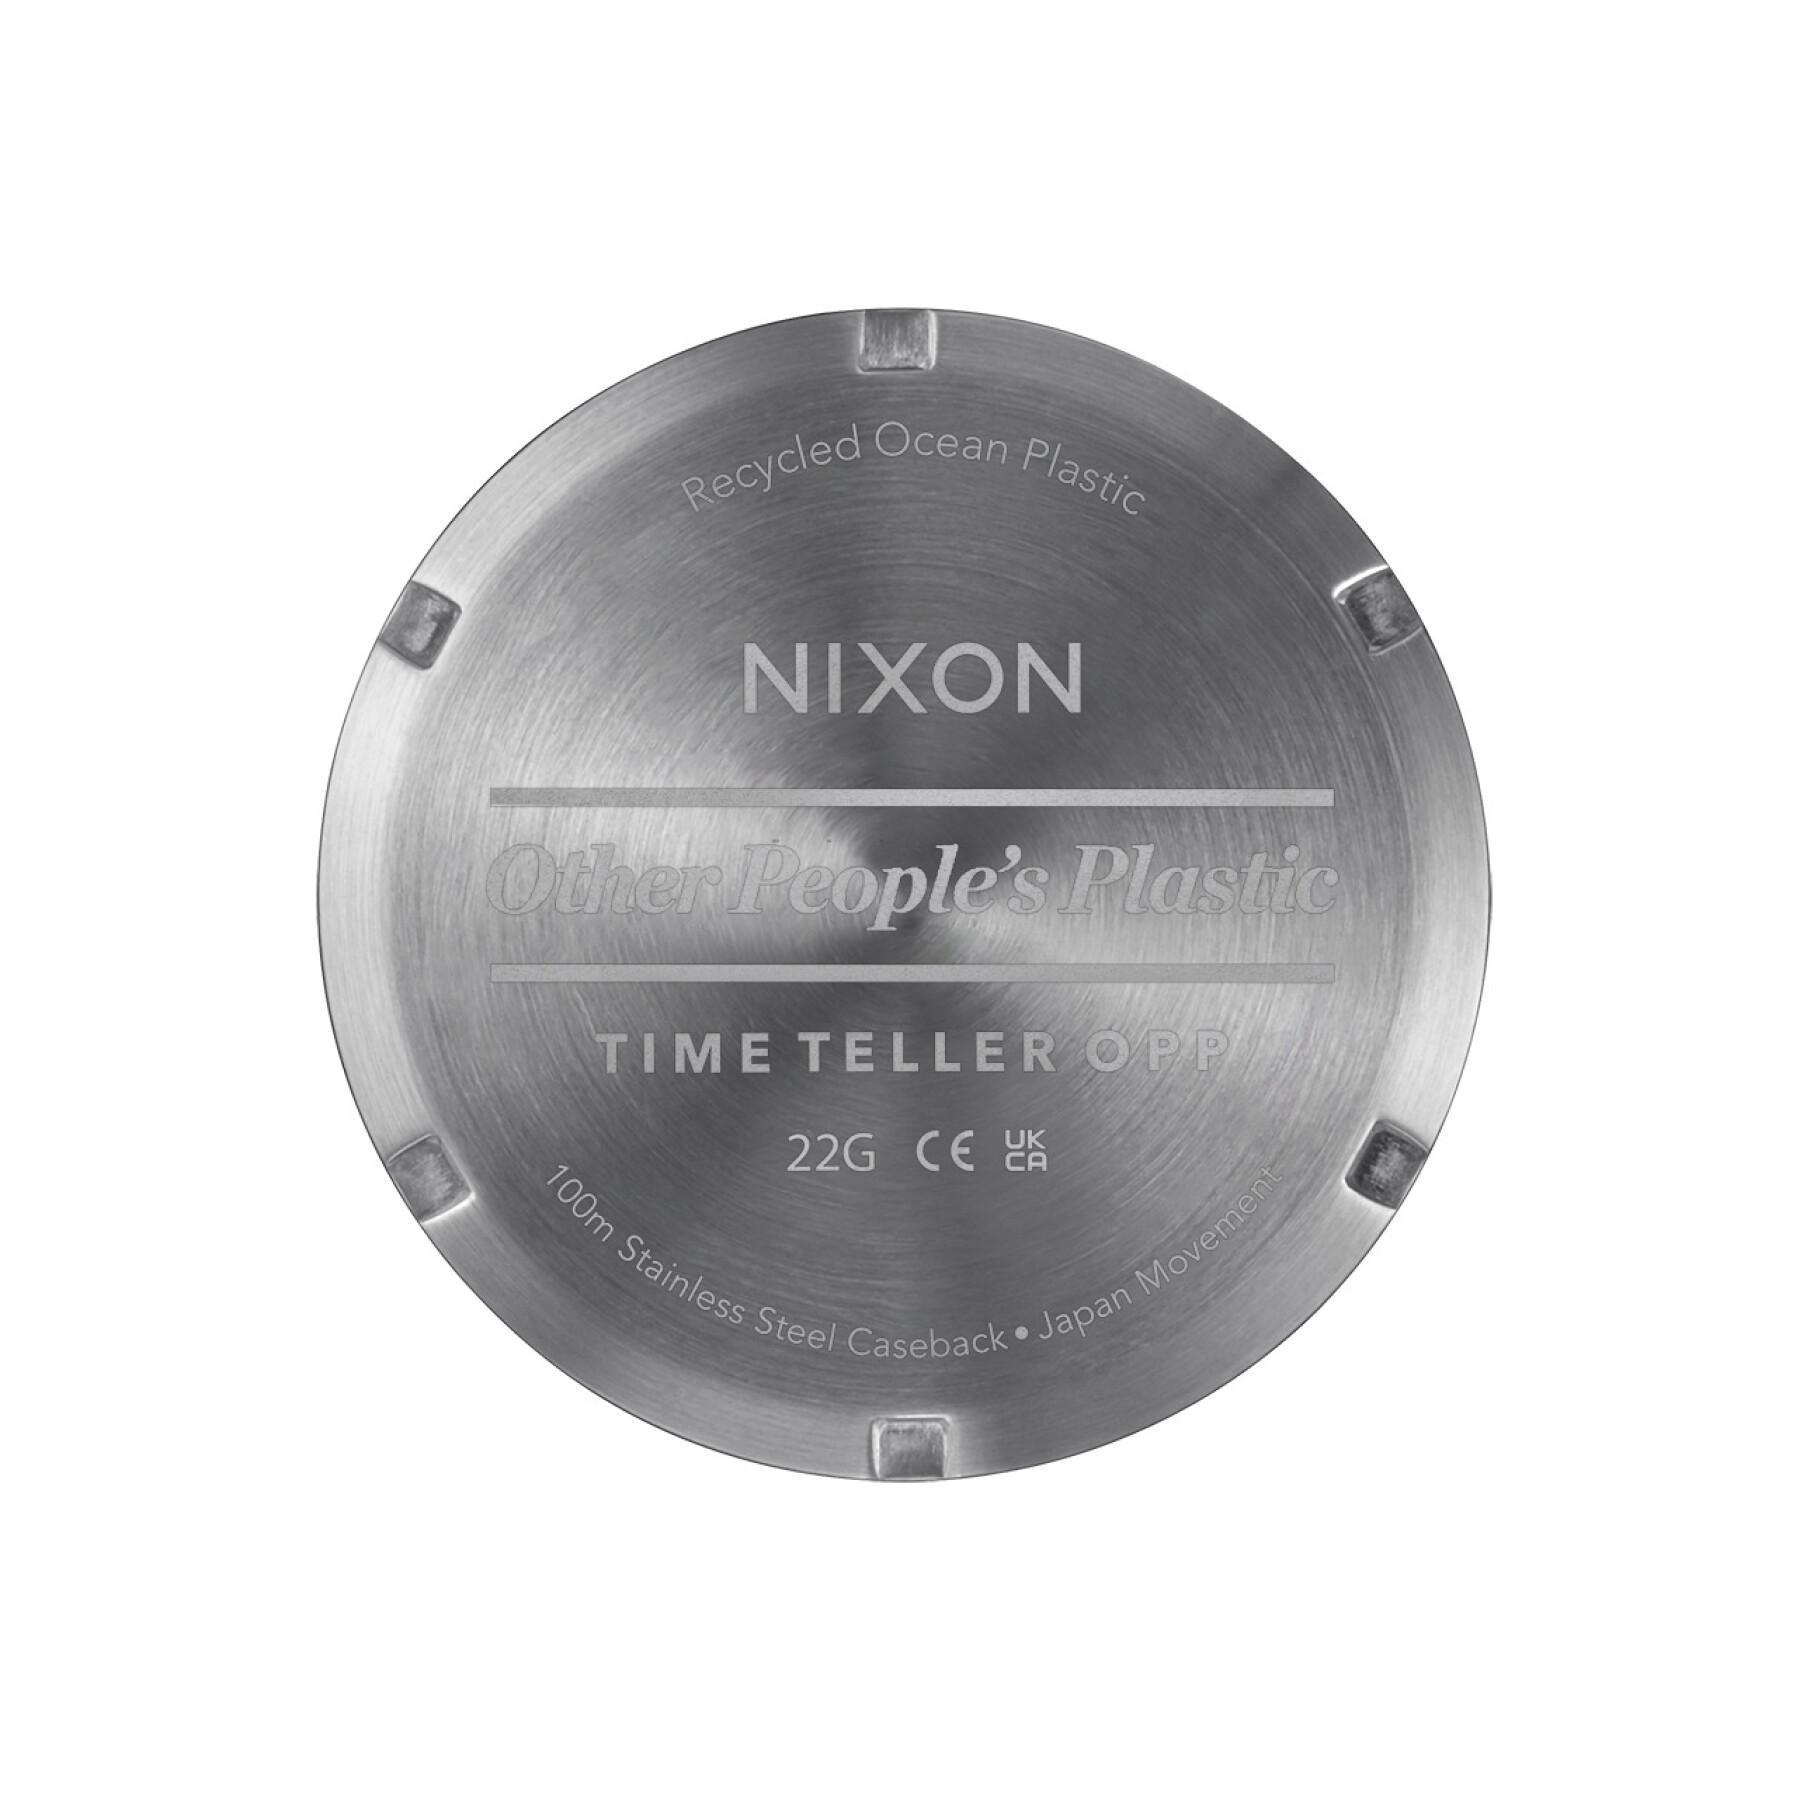 Horloge Nixon Time Teller Opp